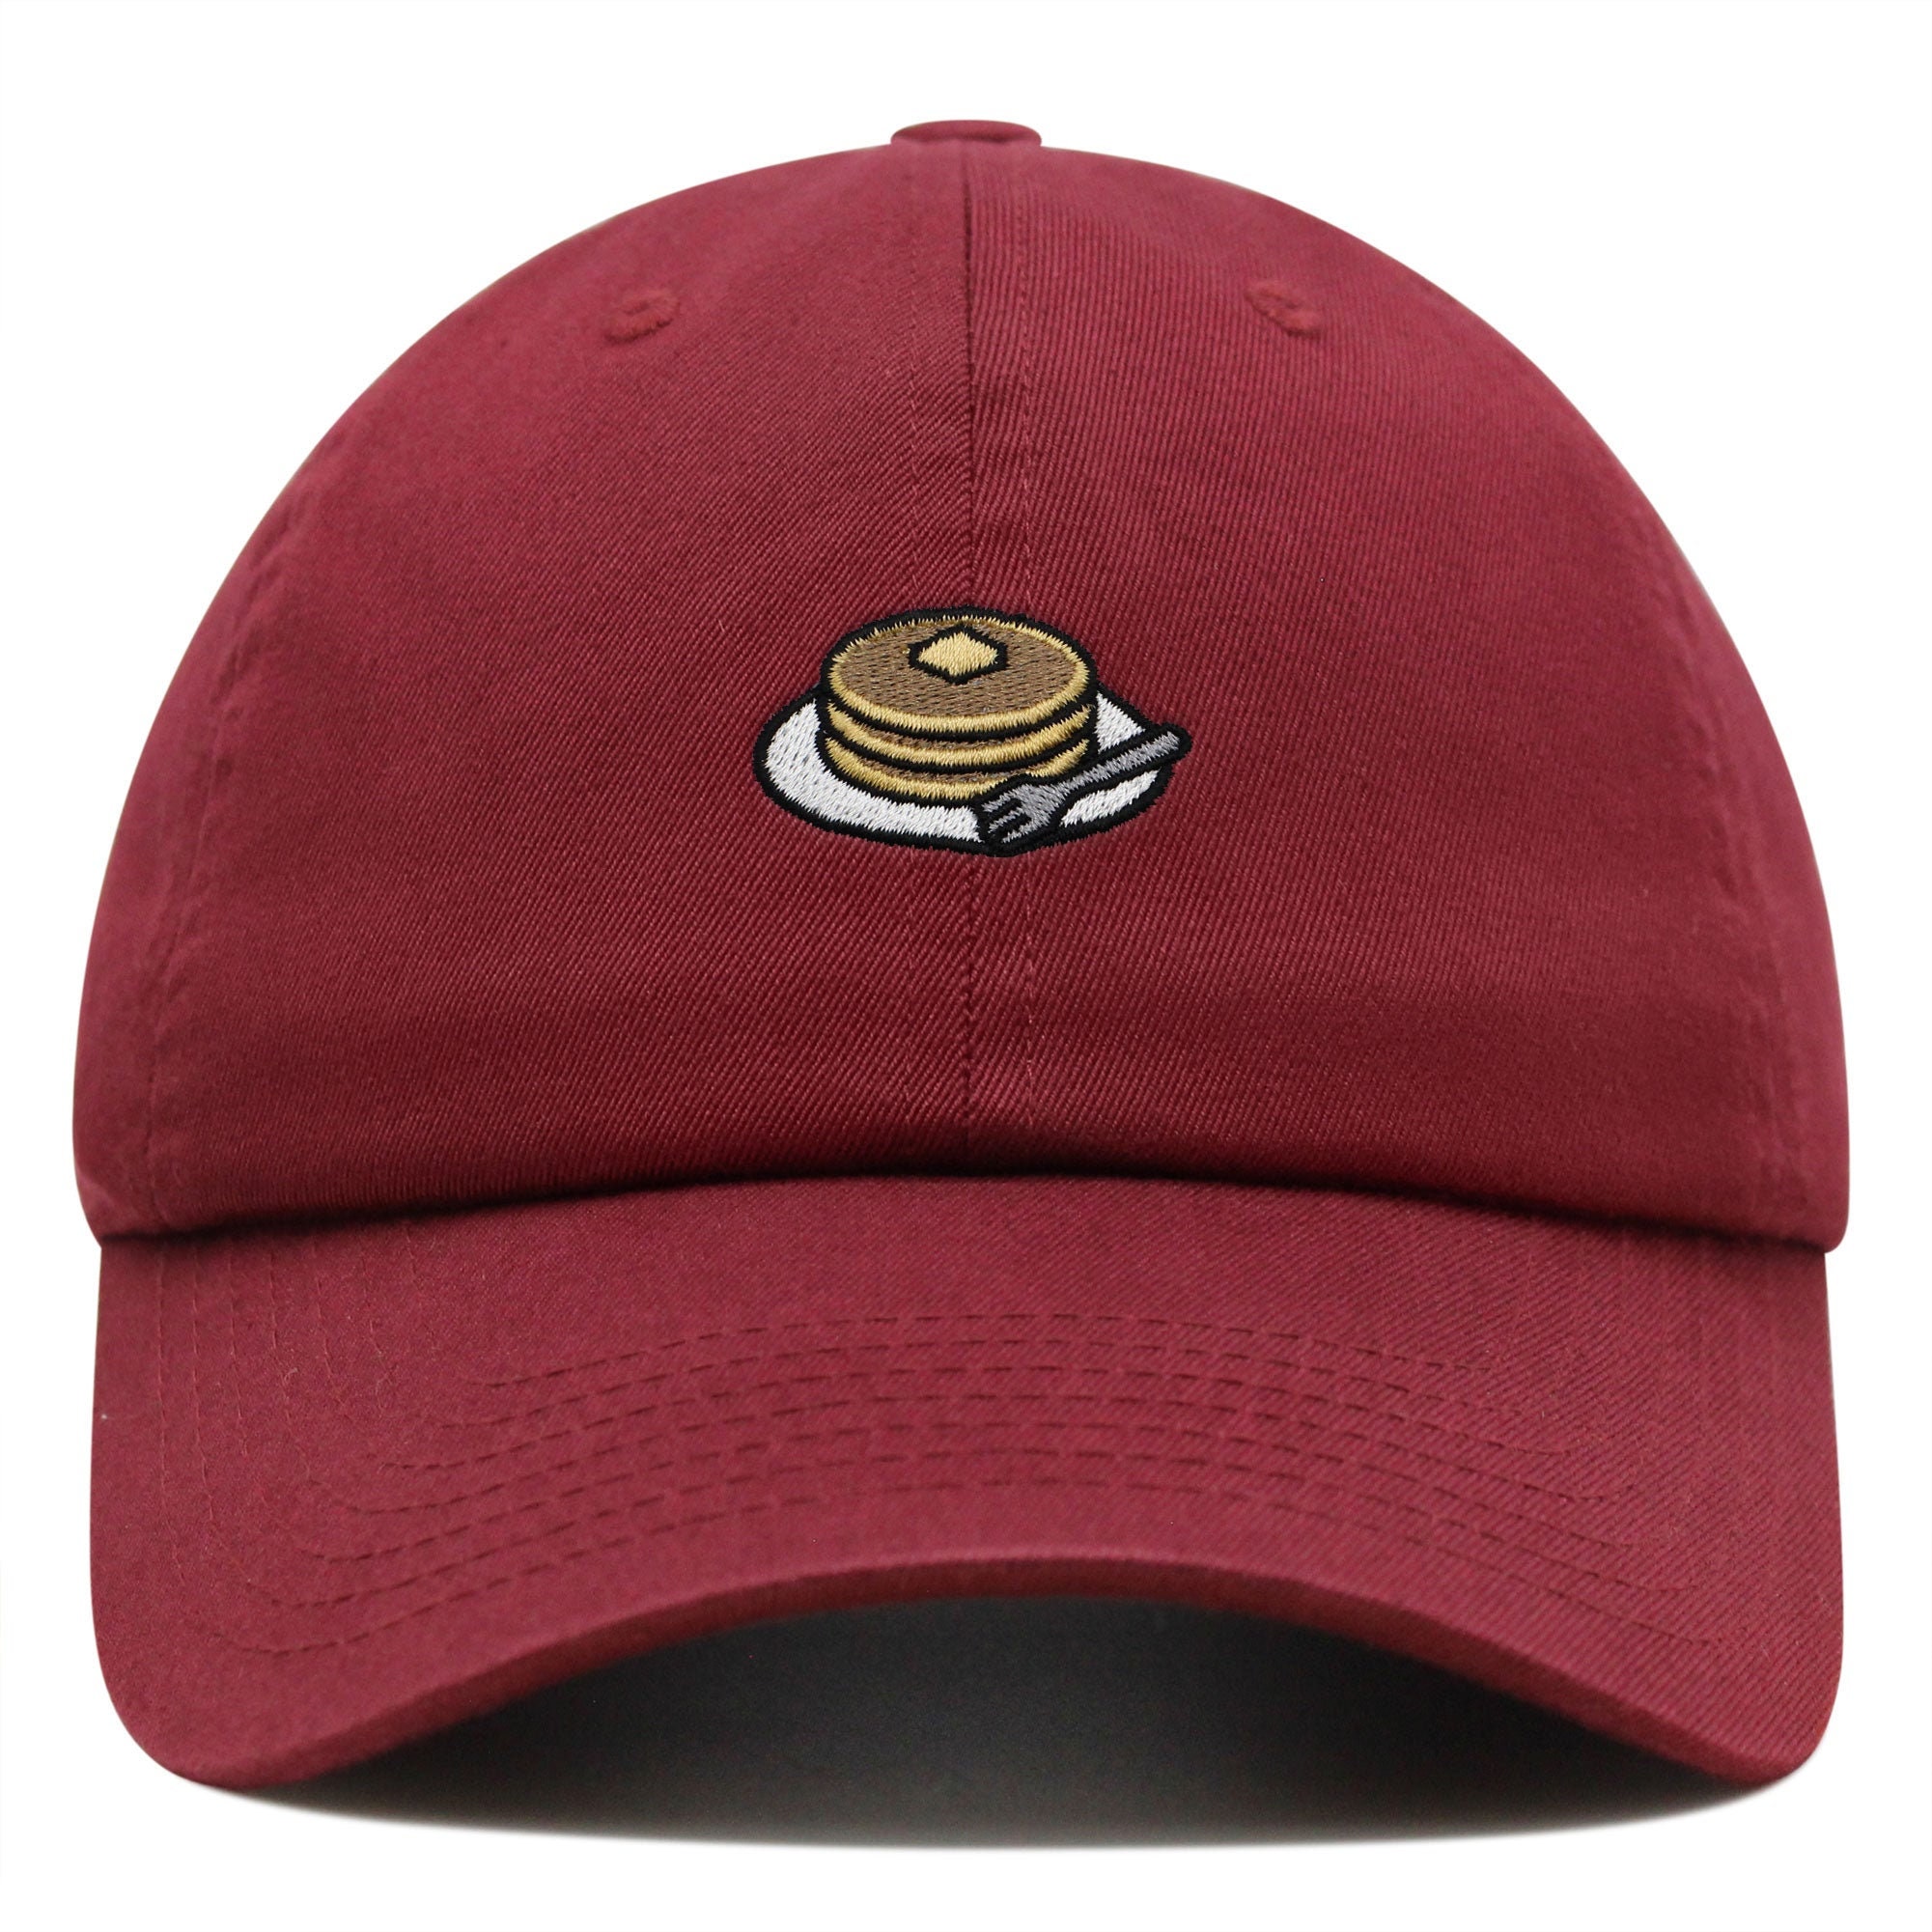 Pancakes Premium Dad Hat Embroidered Baseball Cap Foodie Breakfast